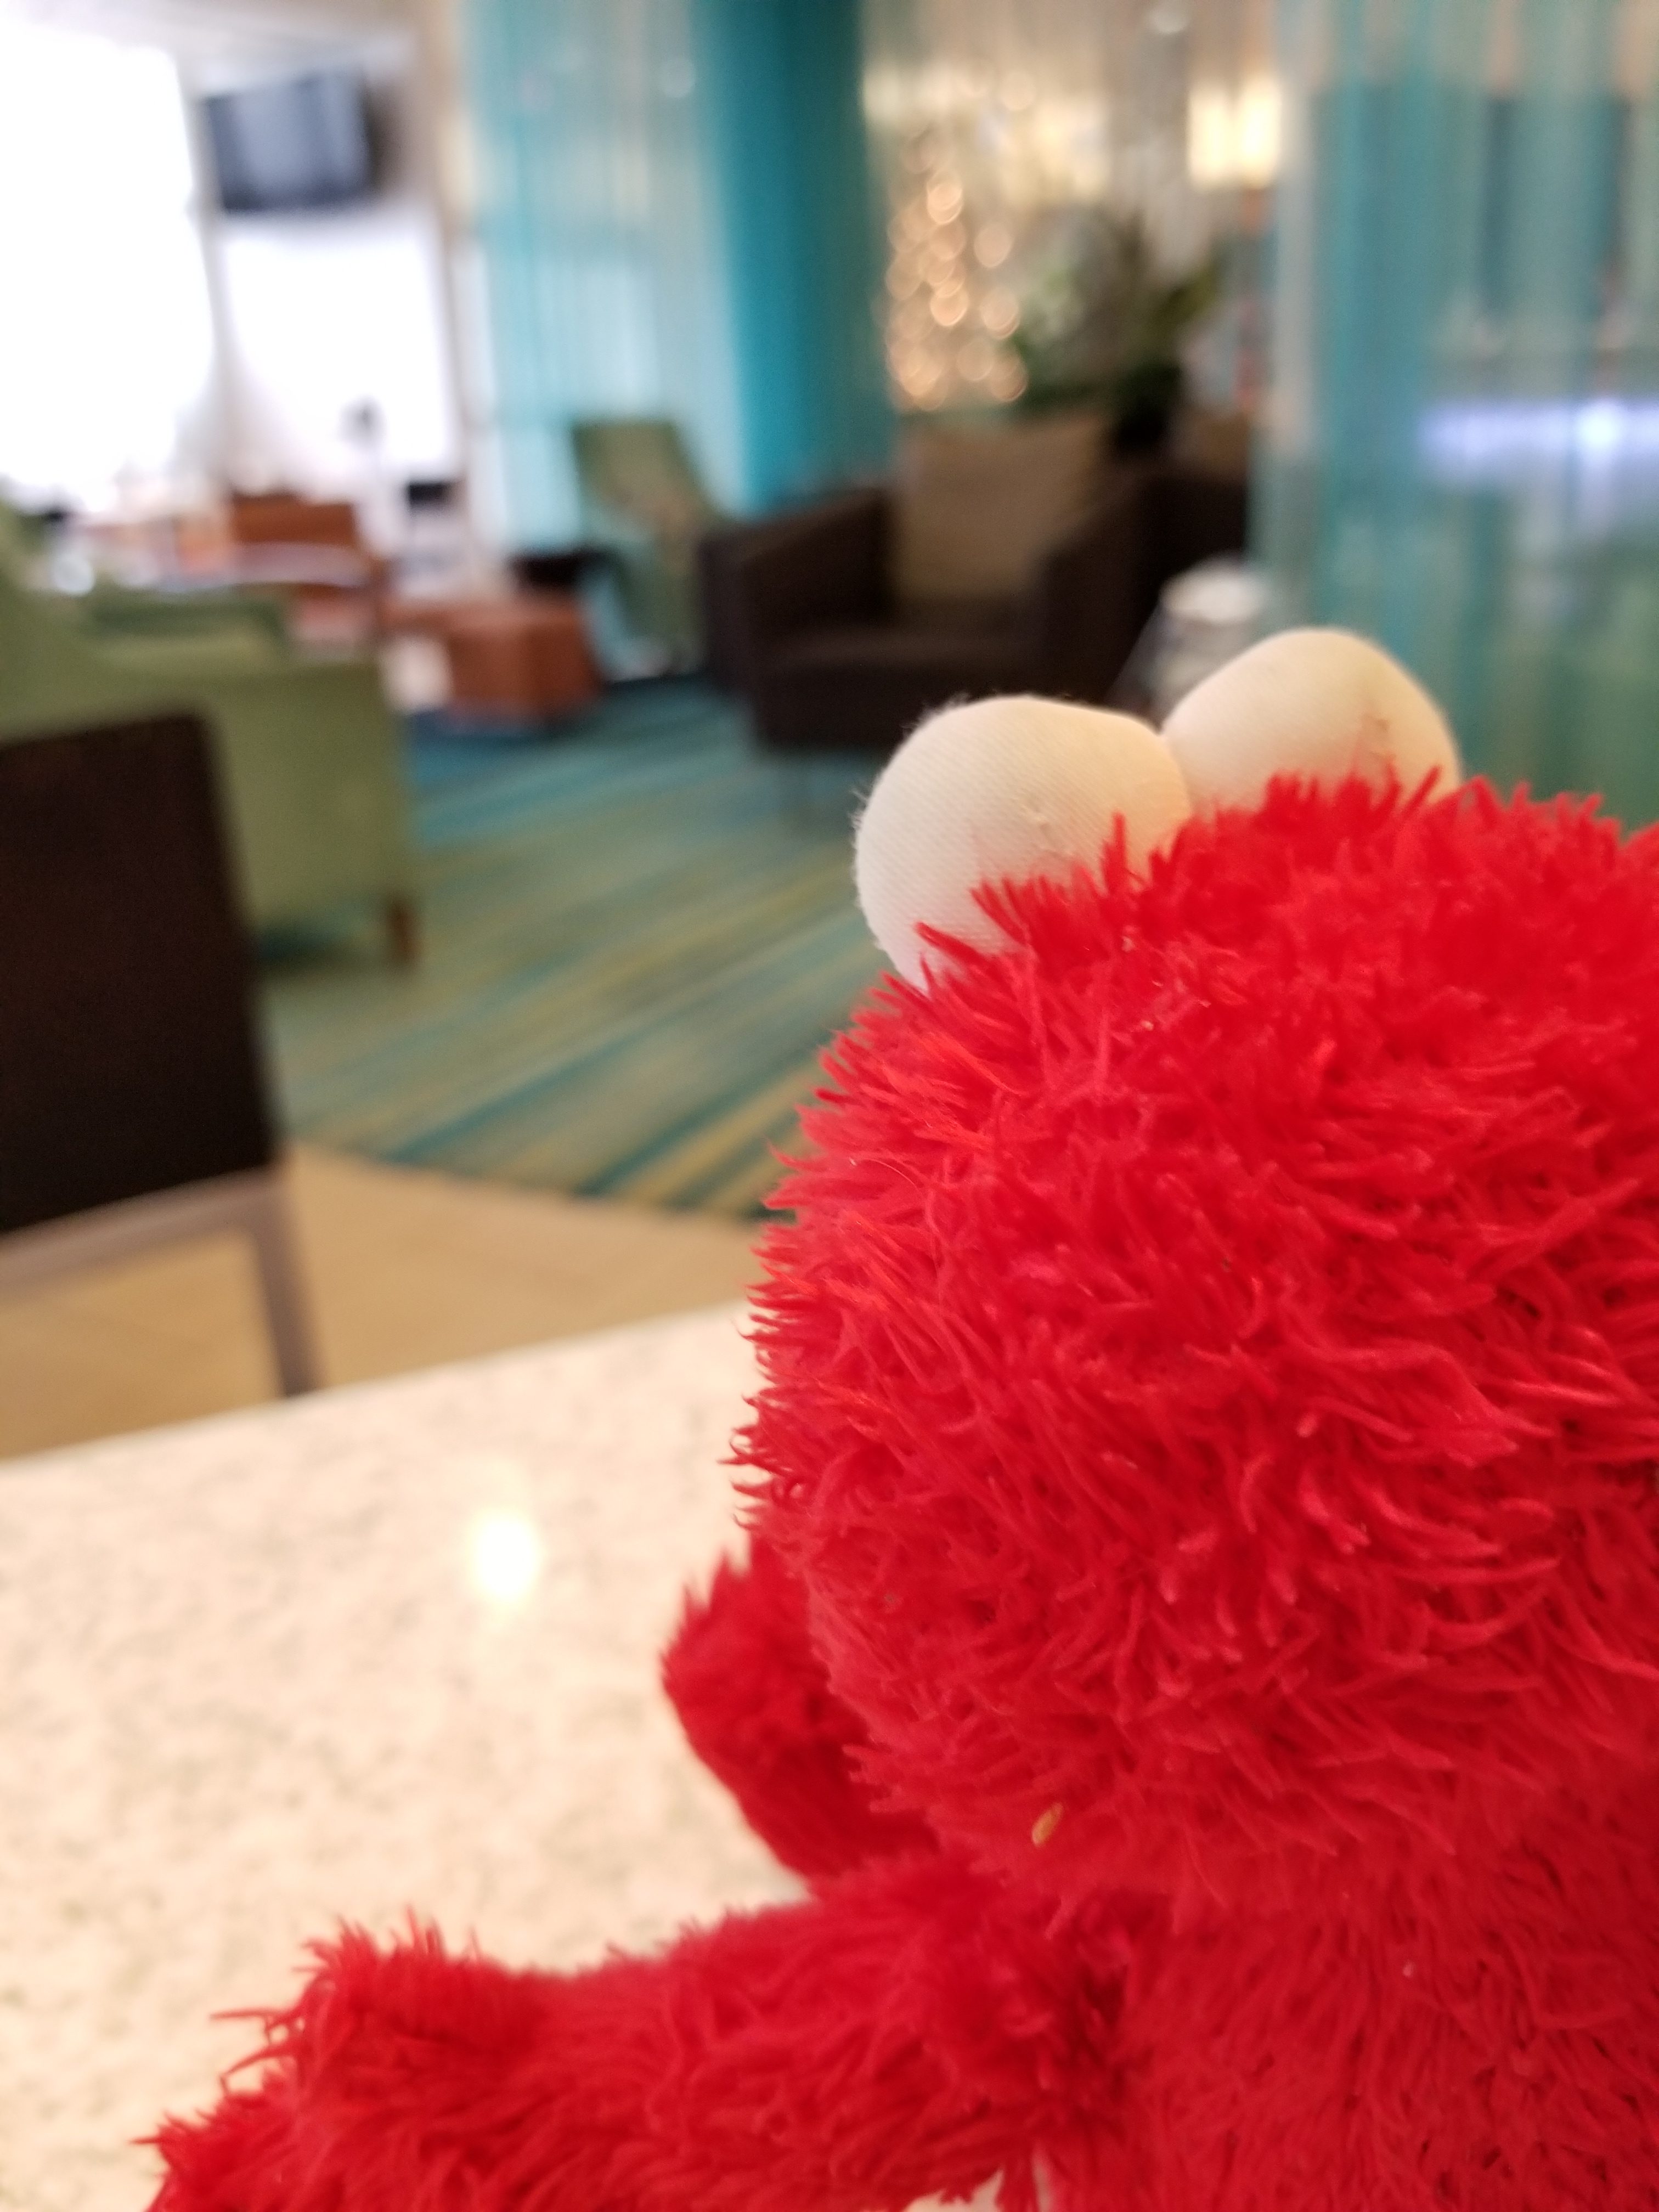 Elmo takes a last look around the Hotel lobby